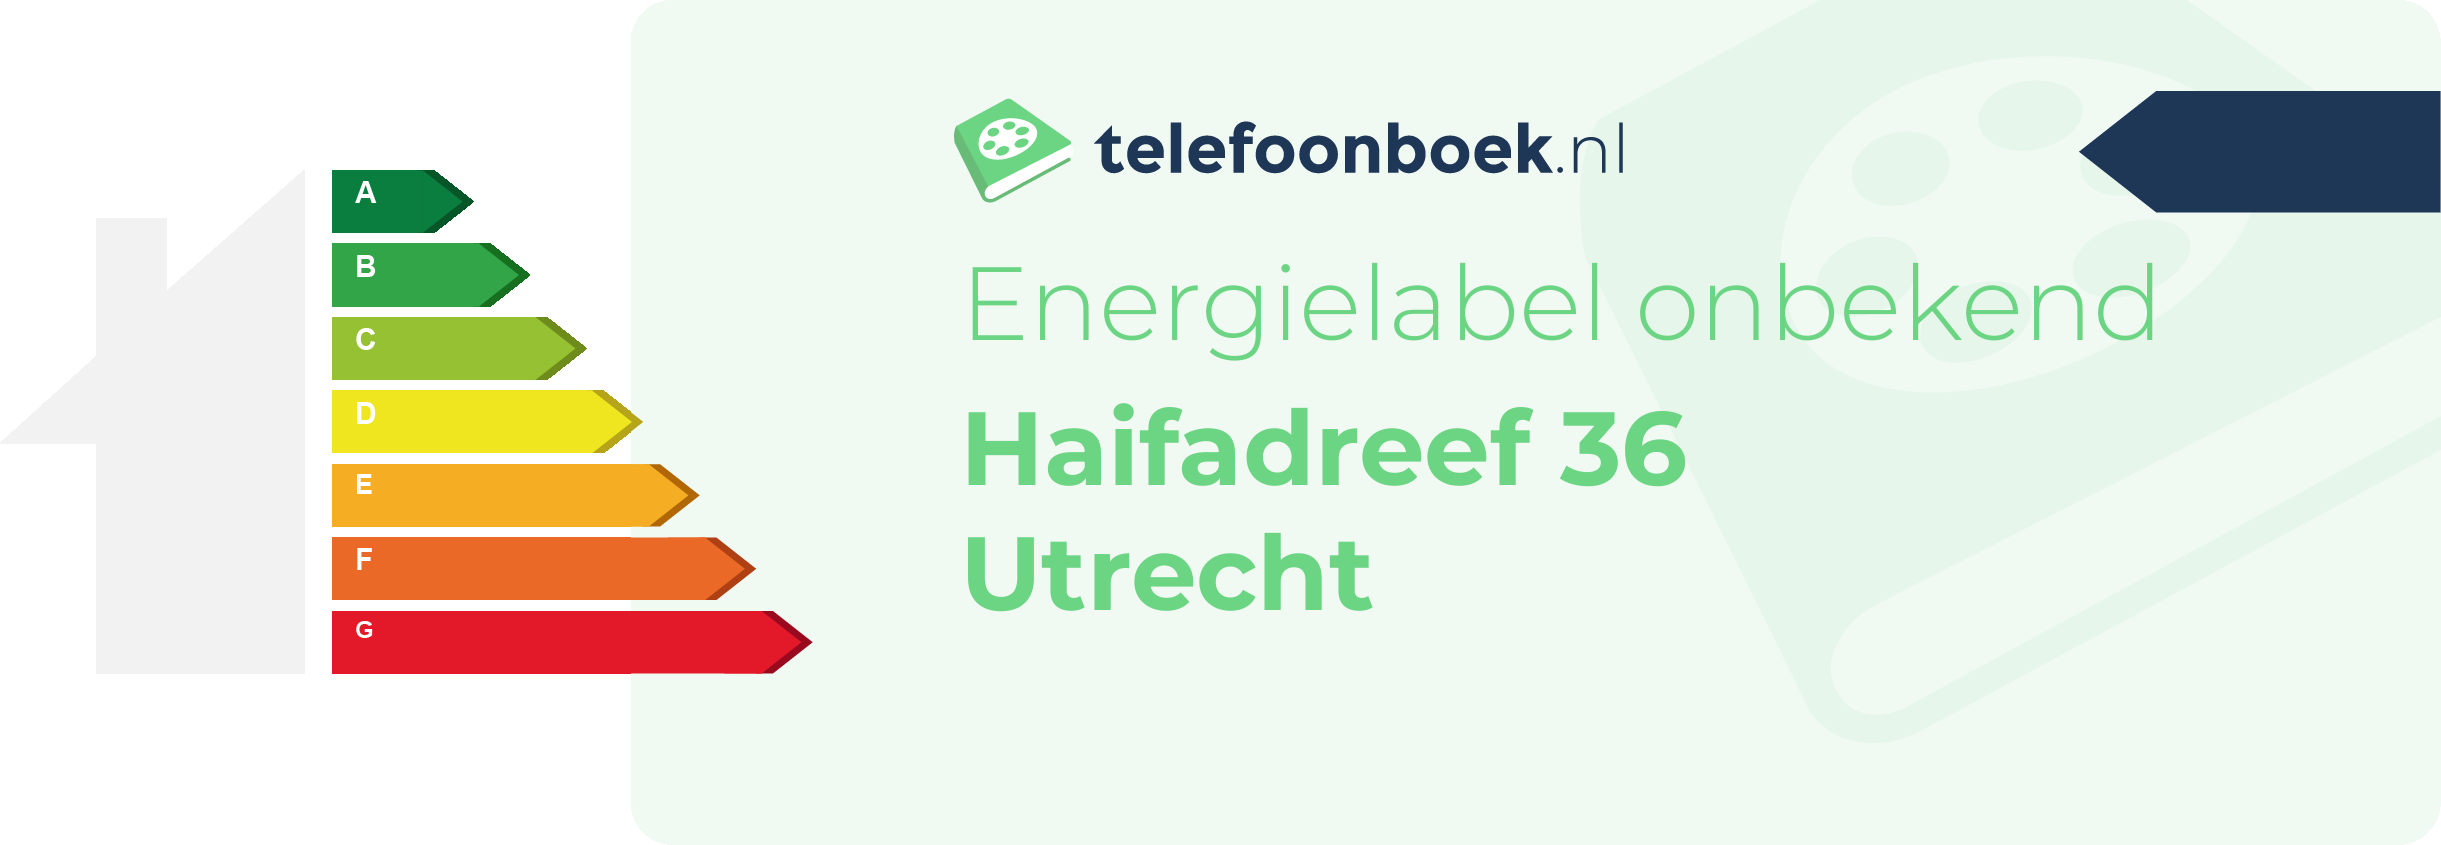 Energielabel Haifadreef 36 Utrecht